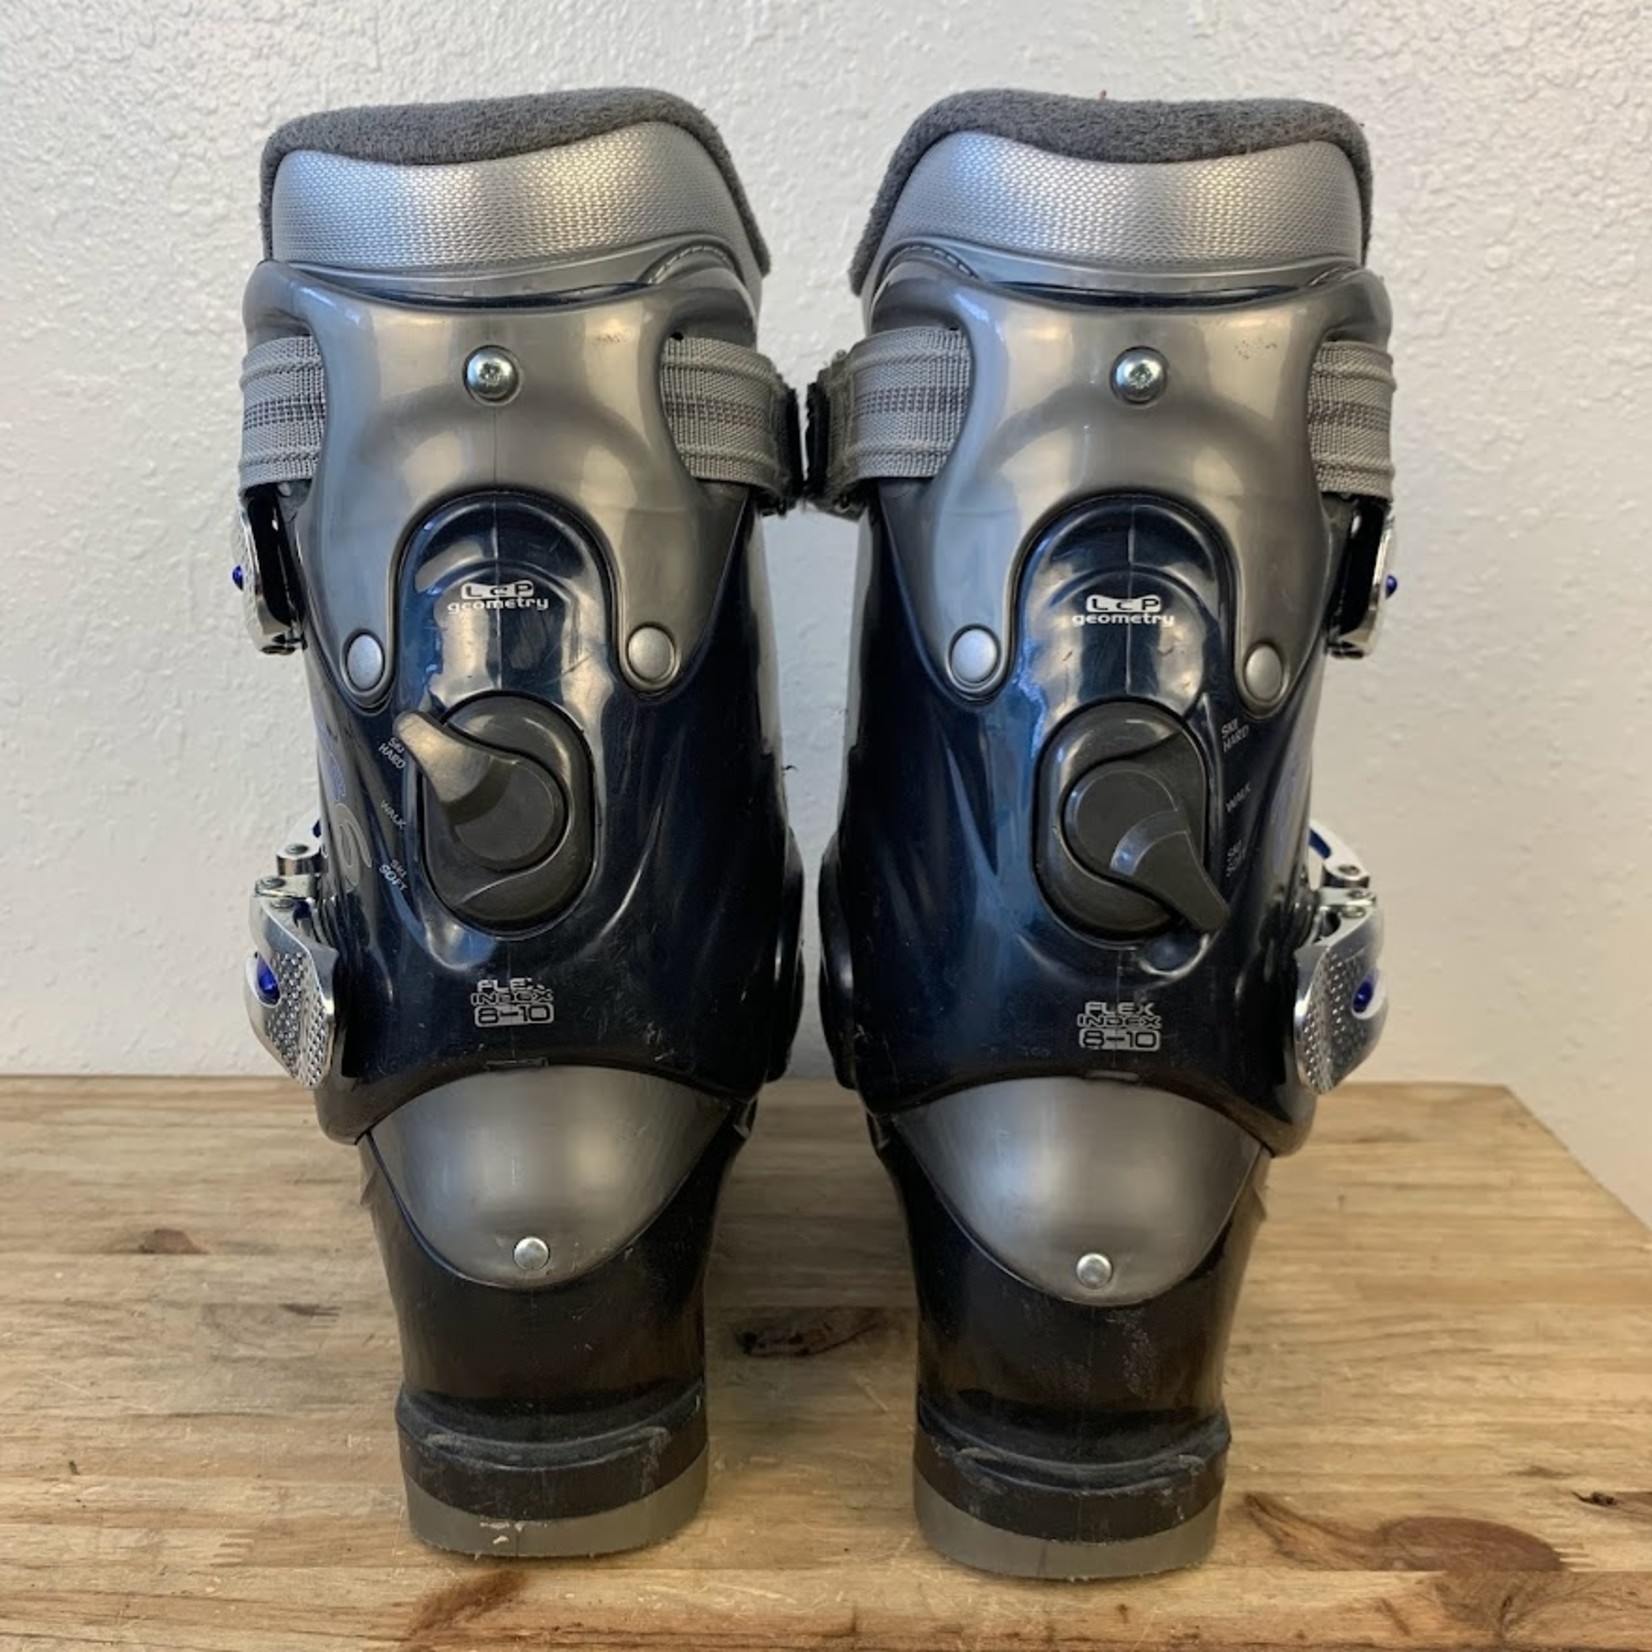 Dalbello ZS6 Ski Boots (Size 23/23.5)